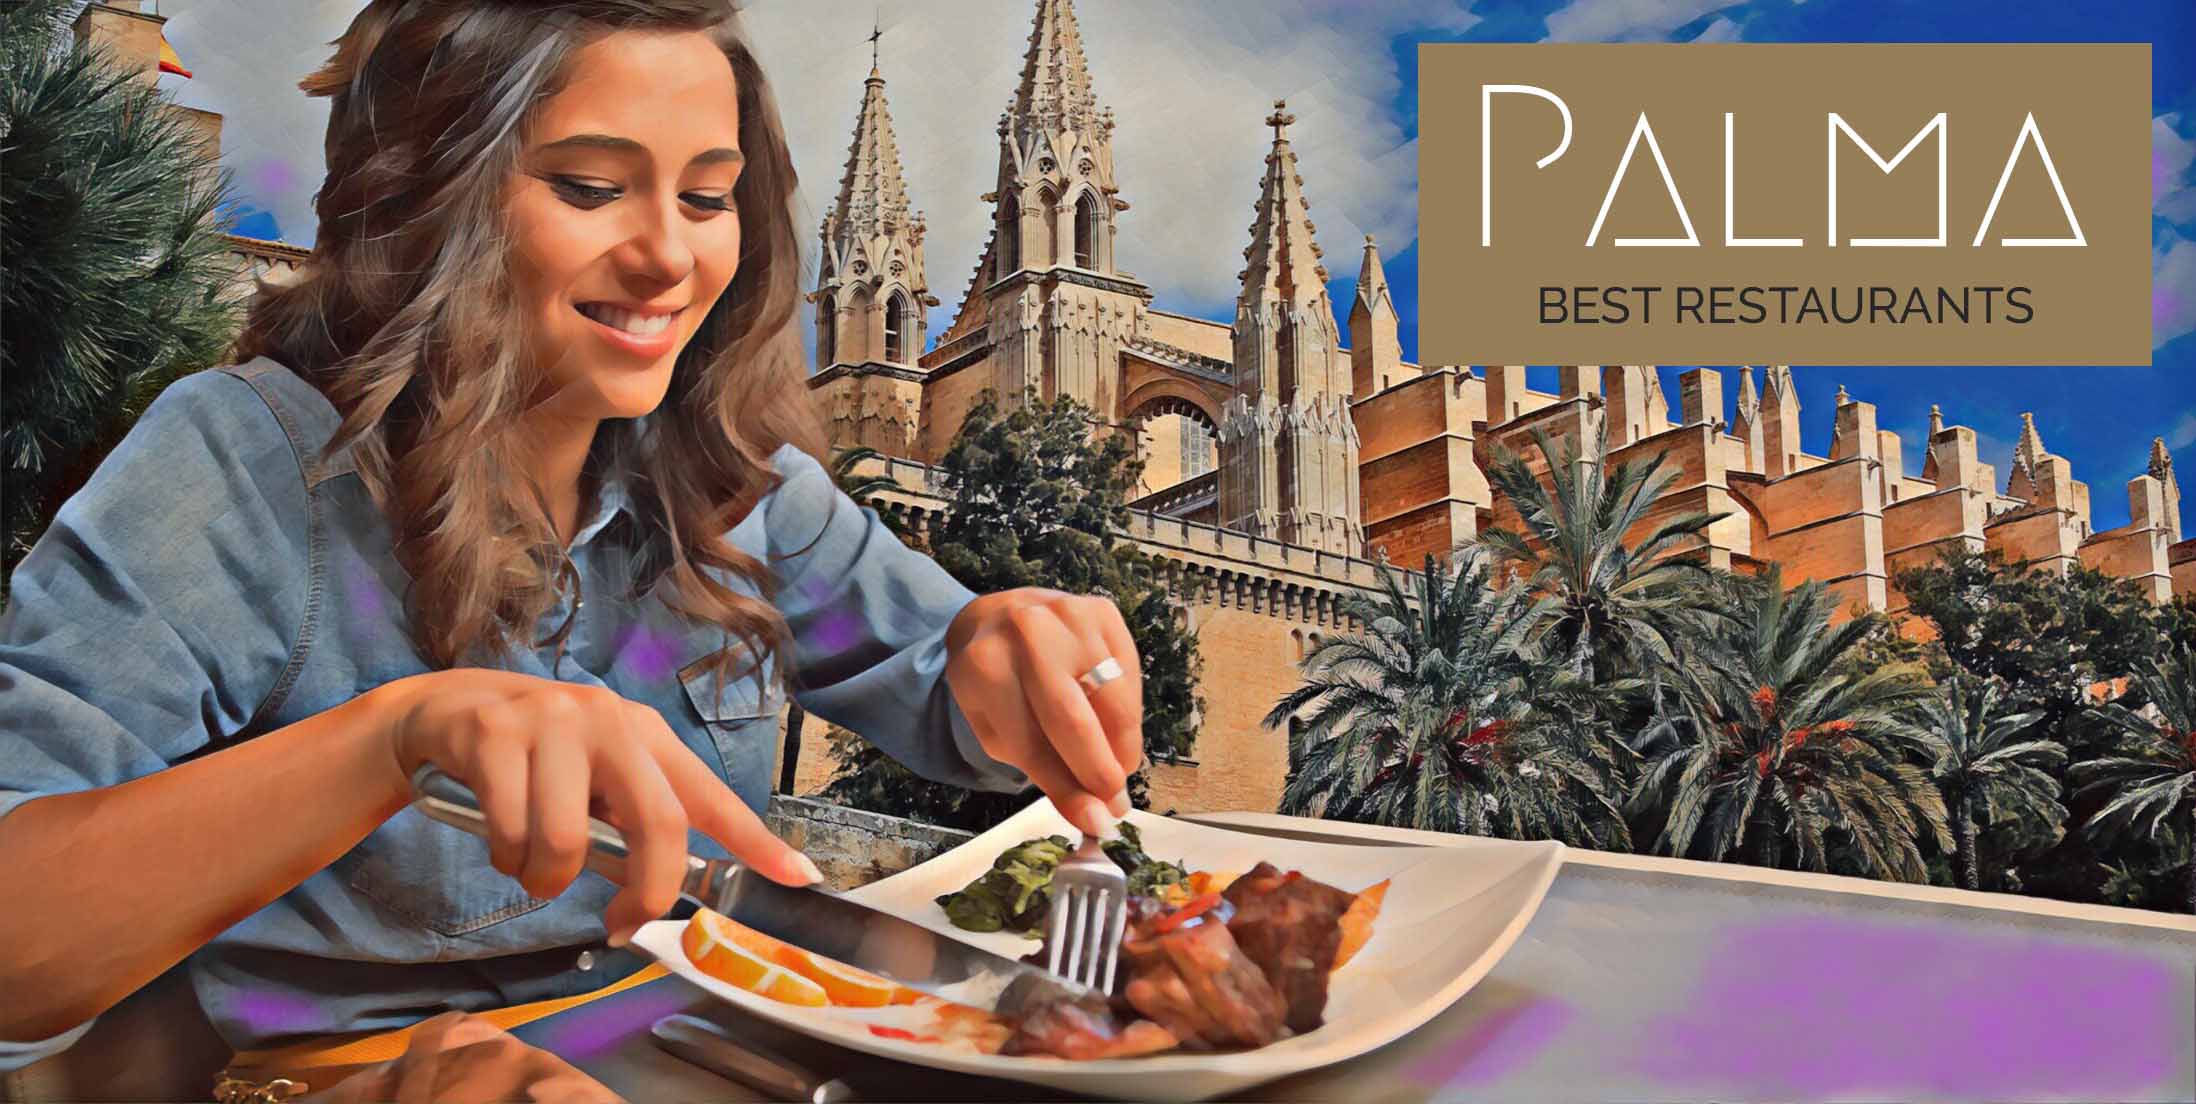 Best Restaurants in Palma